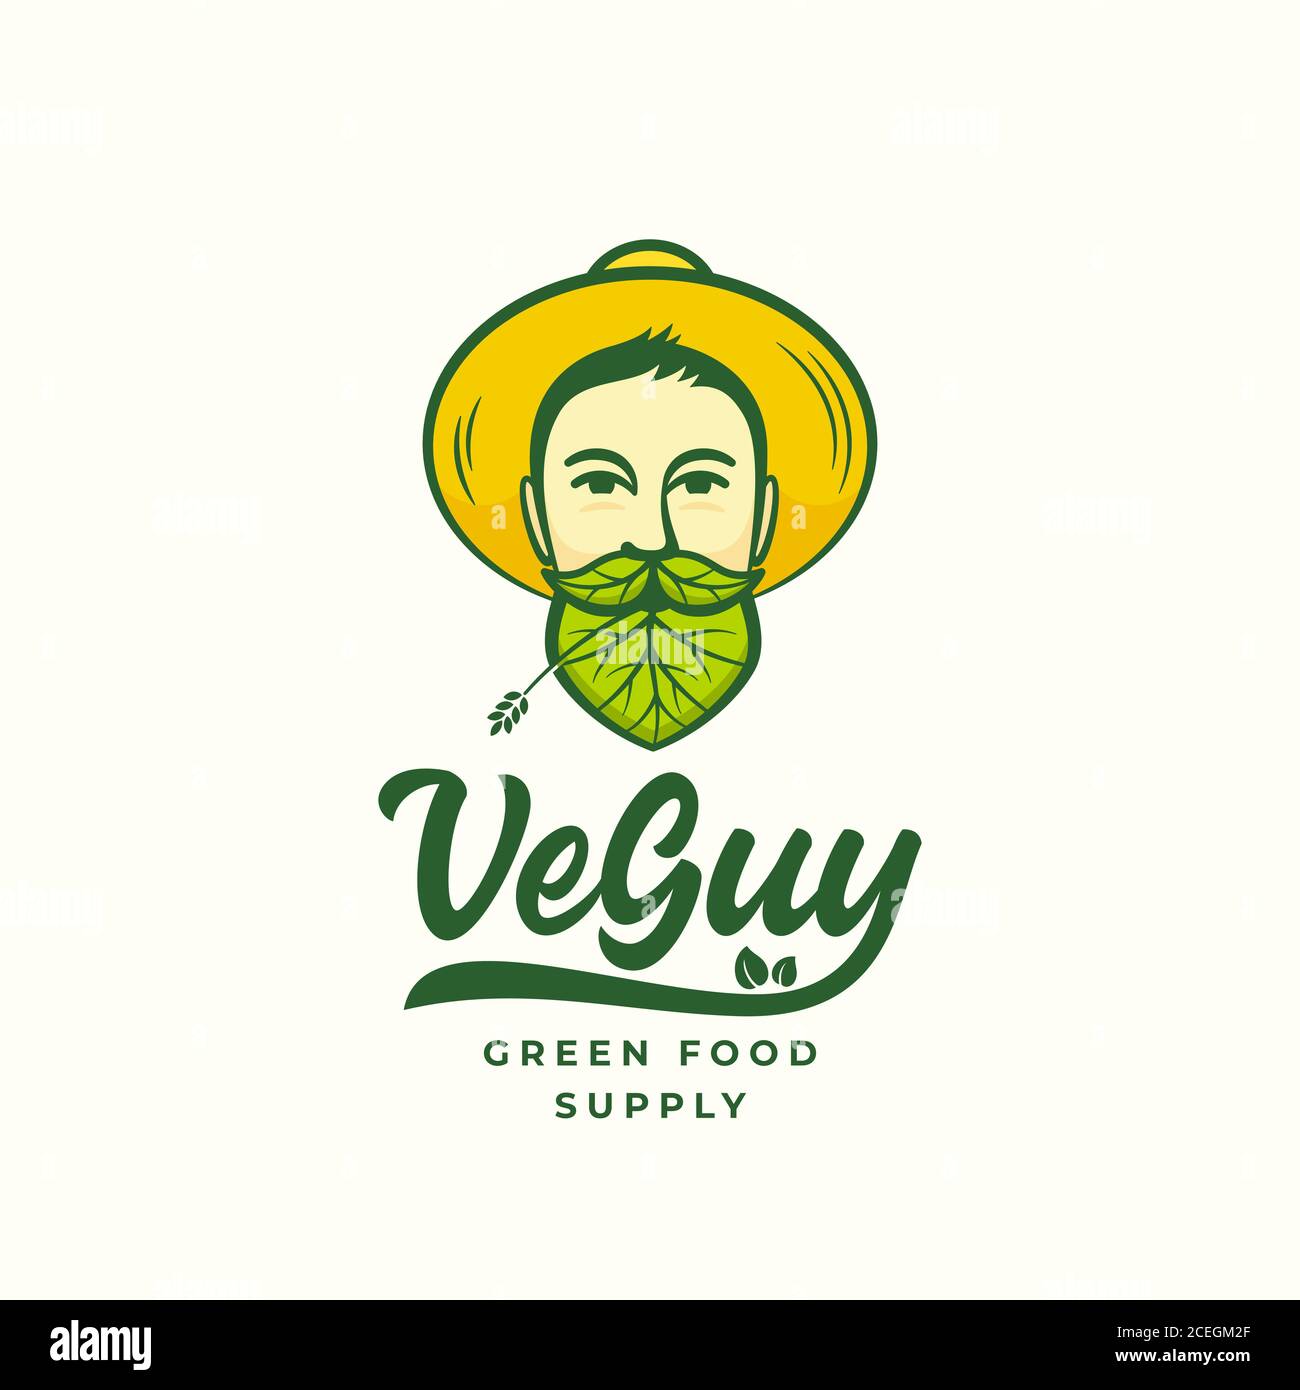 Beard guy logo hi-res stock photography and images - Alamy